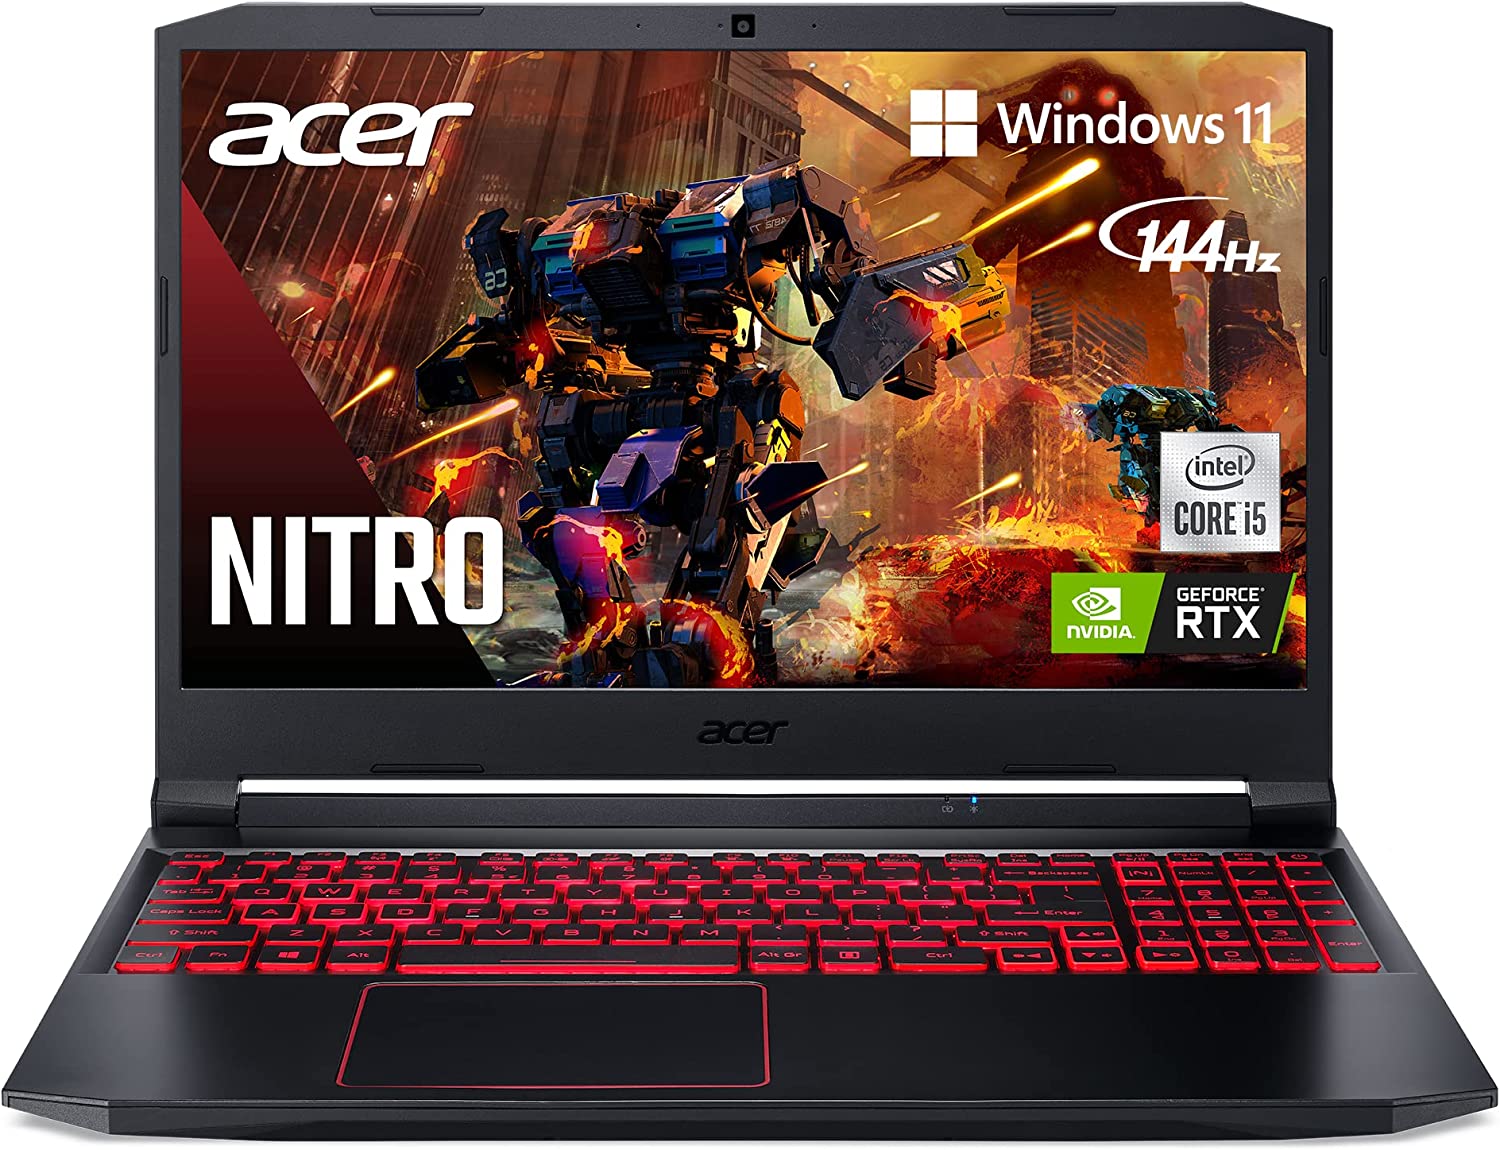 Acer Nitro 5 AN515-55-53E5 Gaming Laptop | Intel Core i5-10300H | NVIDIA GeForce RTX 3050 Laptop GPU | 15.6 FHD 144Hz IPS Display | 8GB DDR4 | 256GB